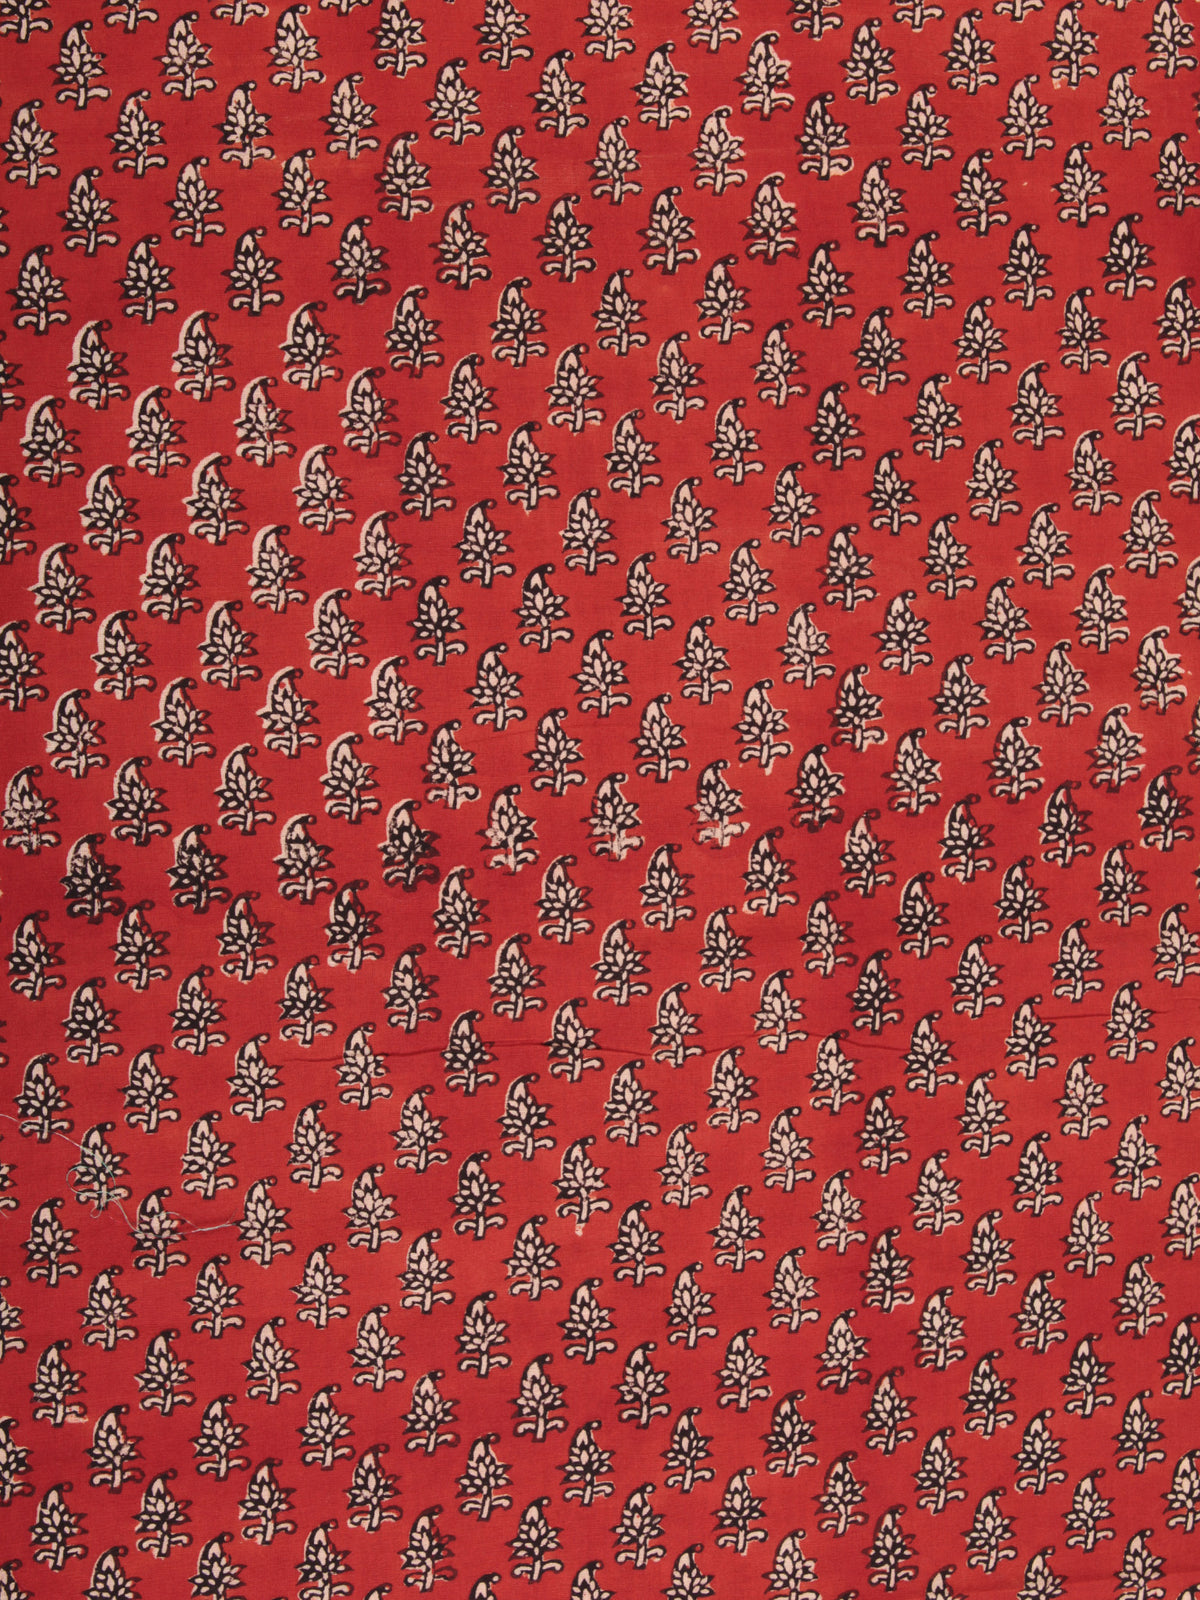 Rustic Red Hand Block Printed Cotton Fabric Per Meter - F001F2438